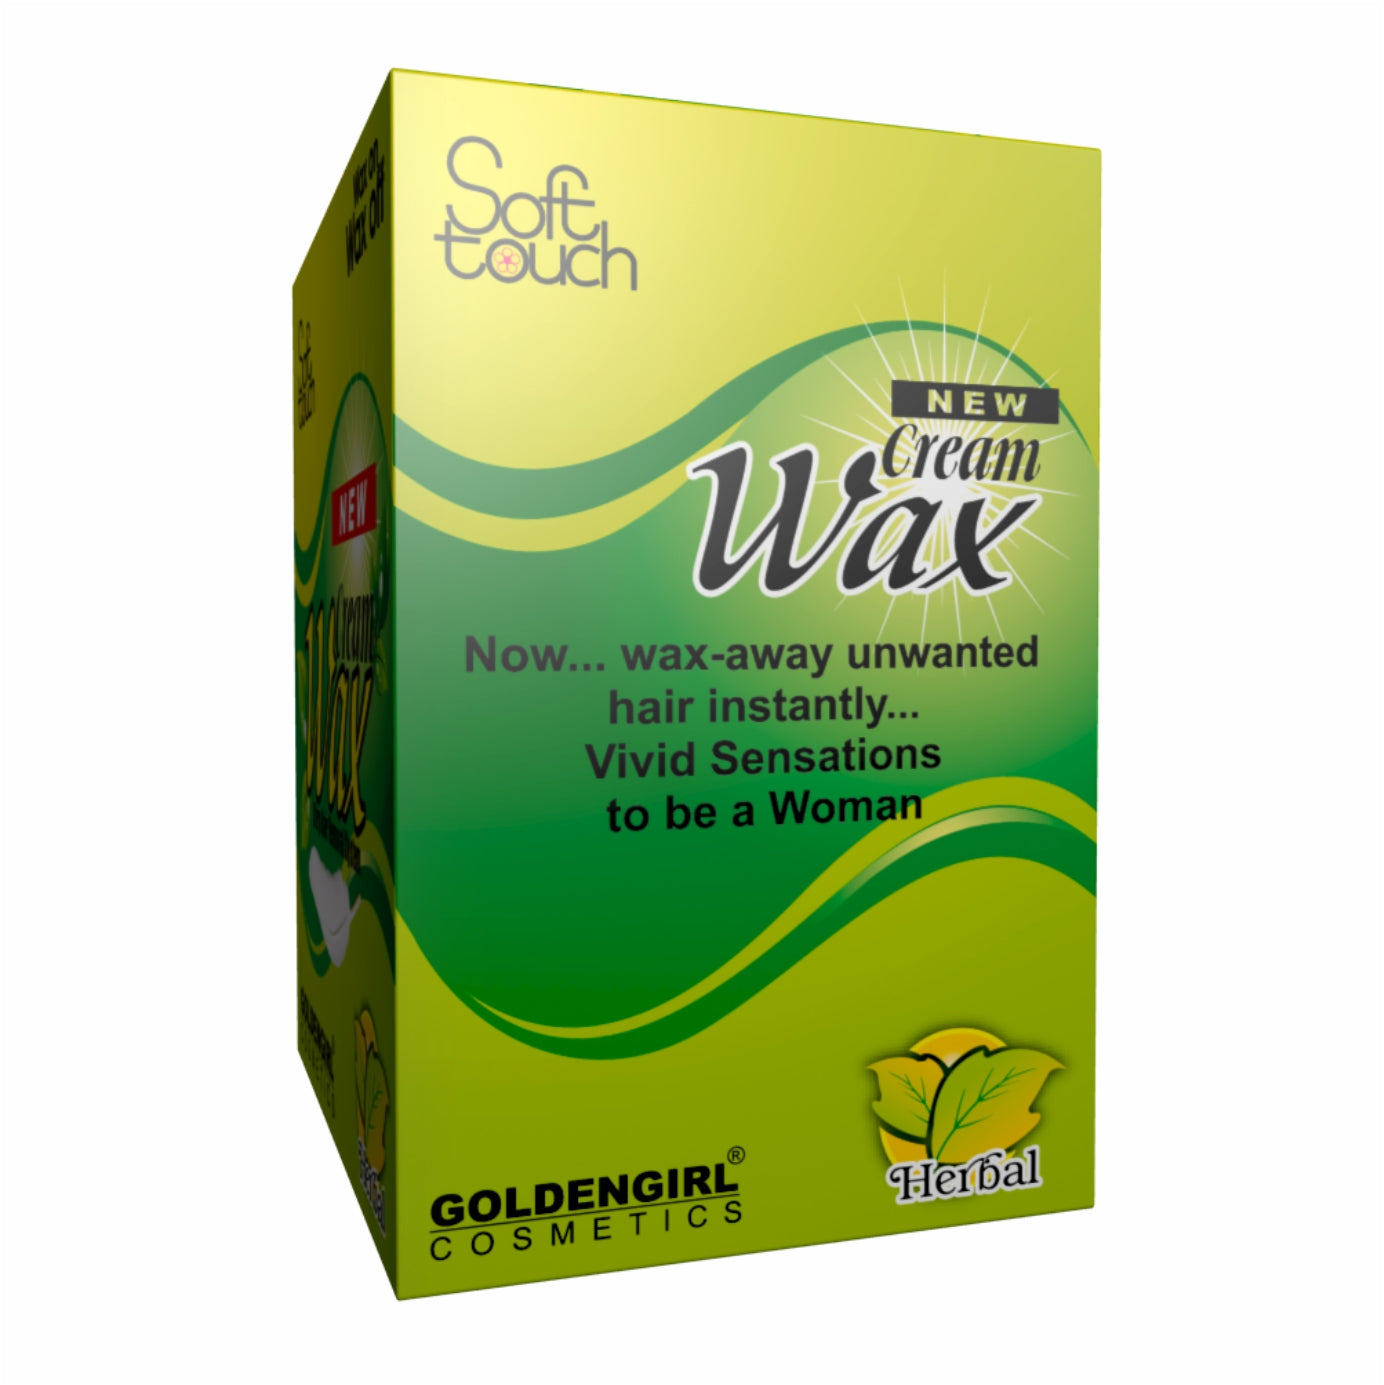 Cream Wax Eco. Pack 200gm - Golden Girl Cosmetics